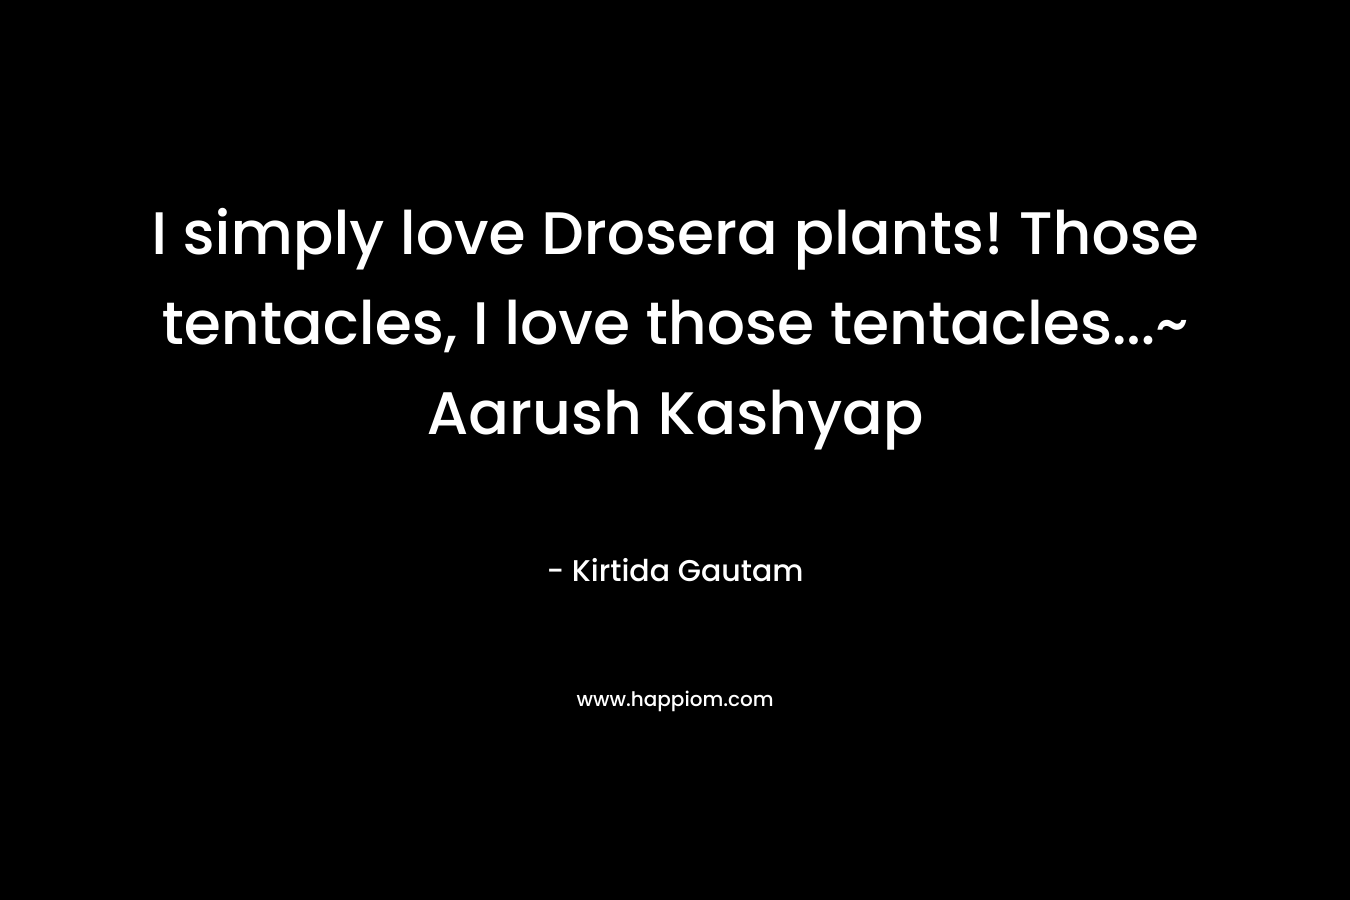 I simply love Drosera plants! Those tentacles, I love those tentacles...~ Aarush Kashyap